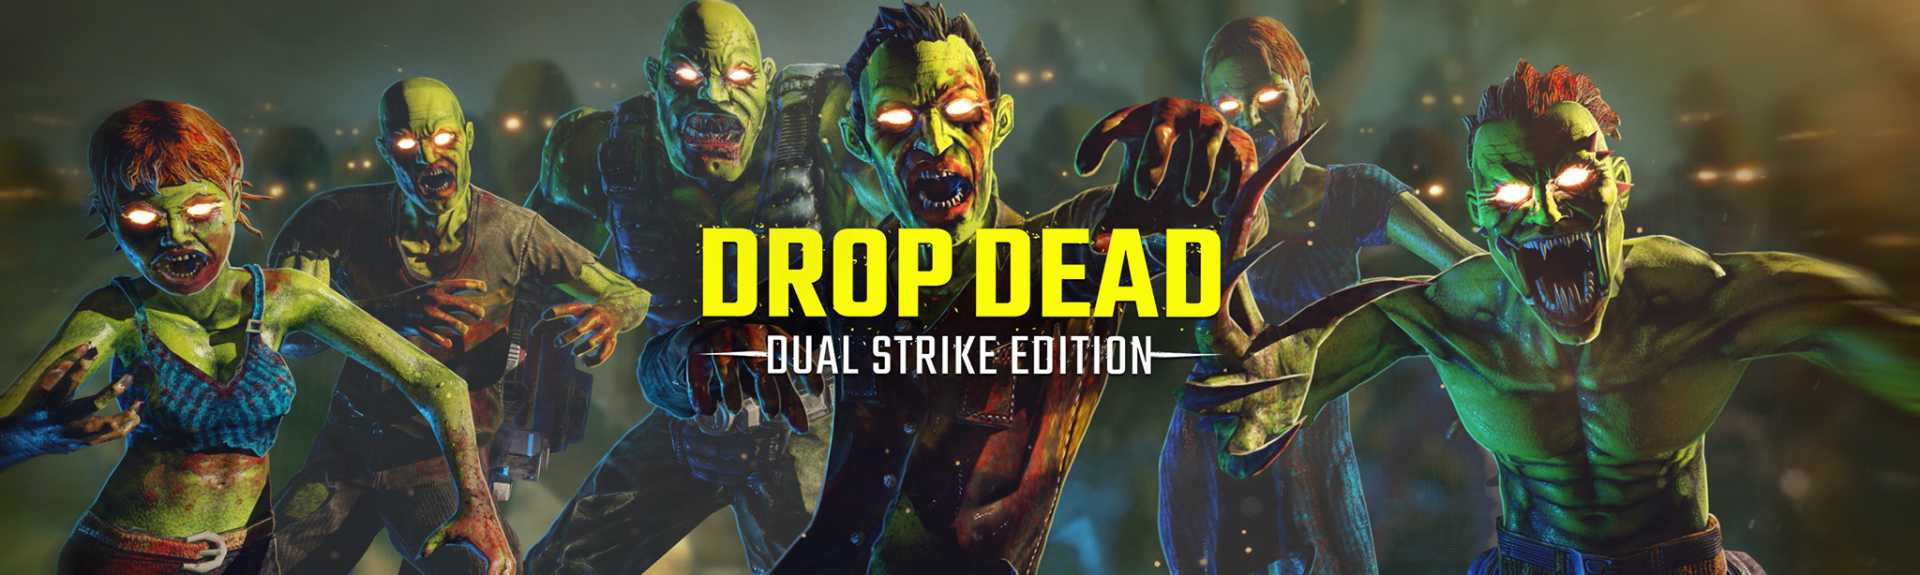 Drop Dead: Dual Strike Edition - ANÁLISIS